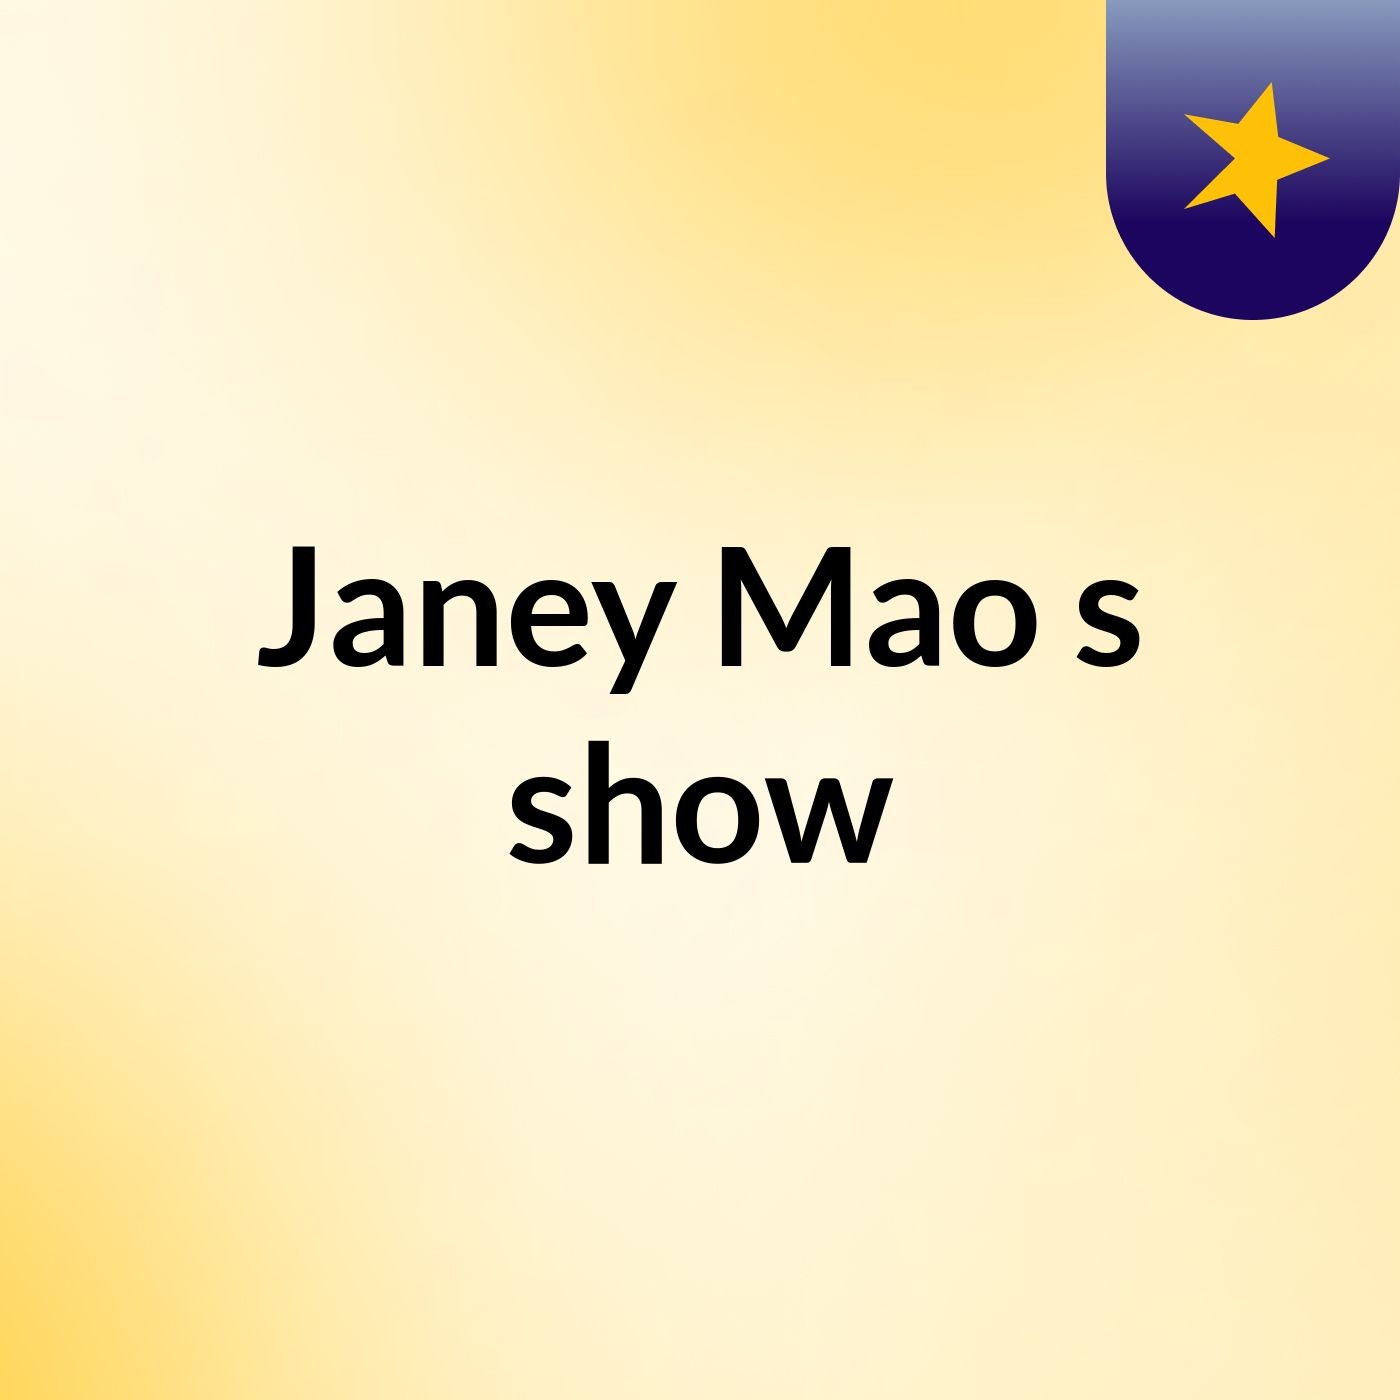 Janey Mao's show